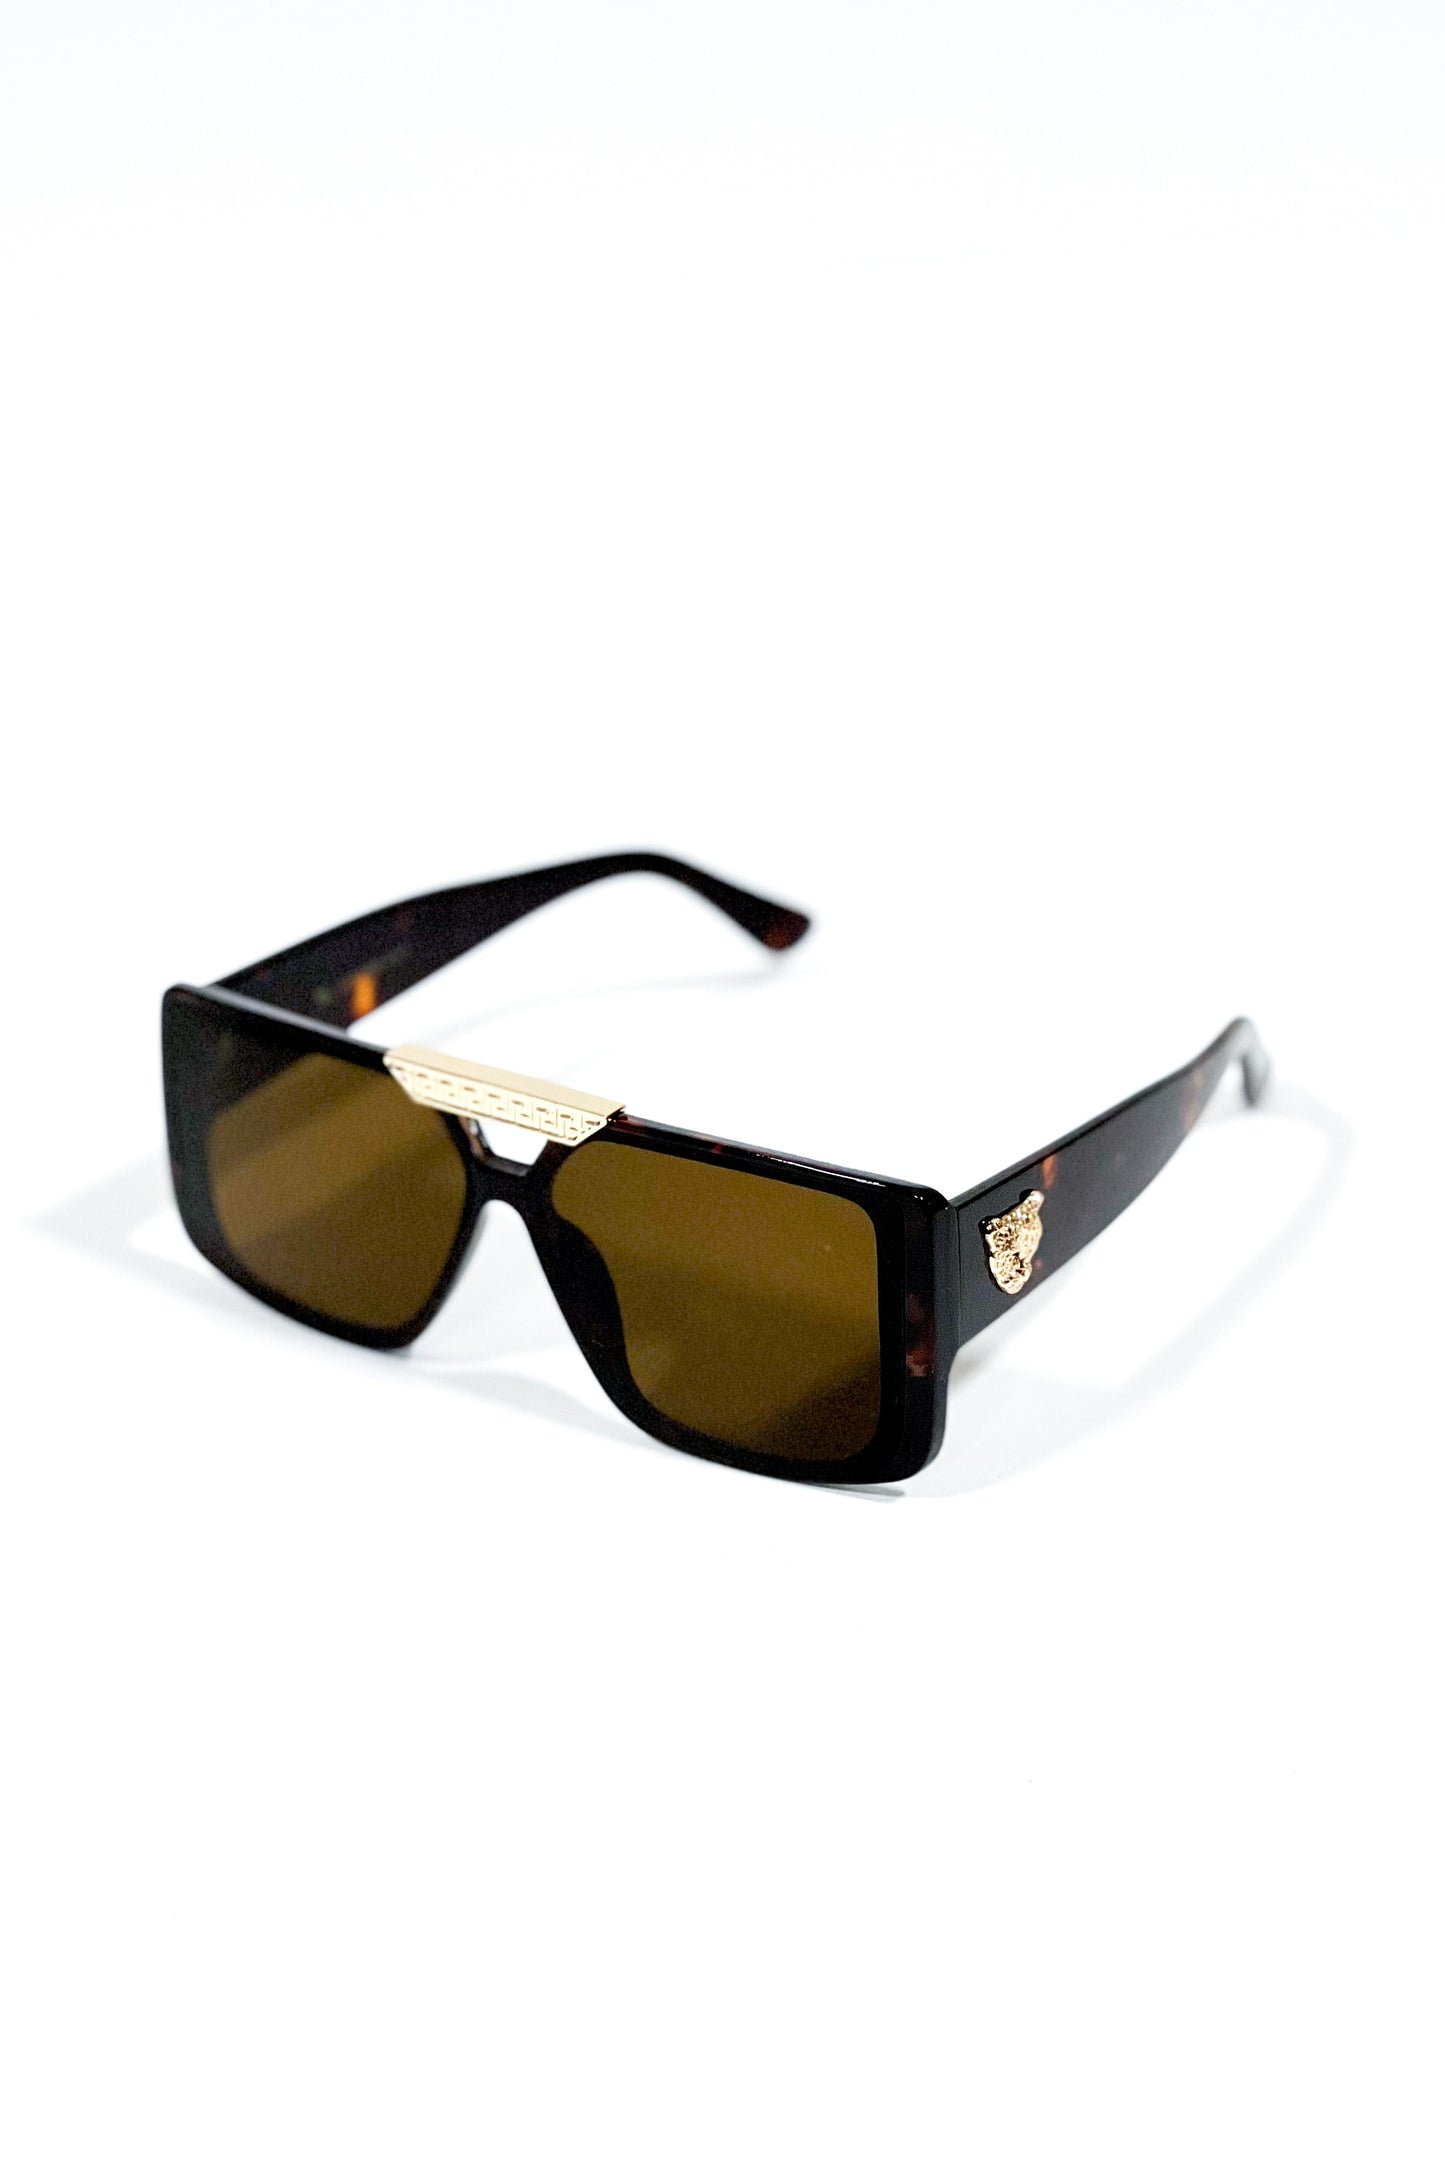 Roman Brow Bar Sunglasses